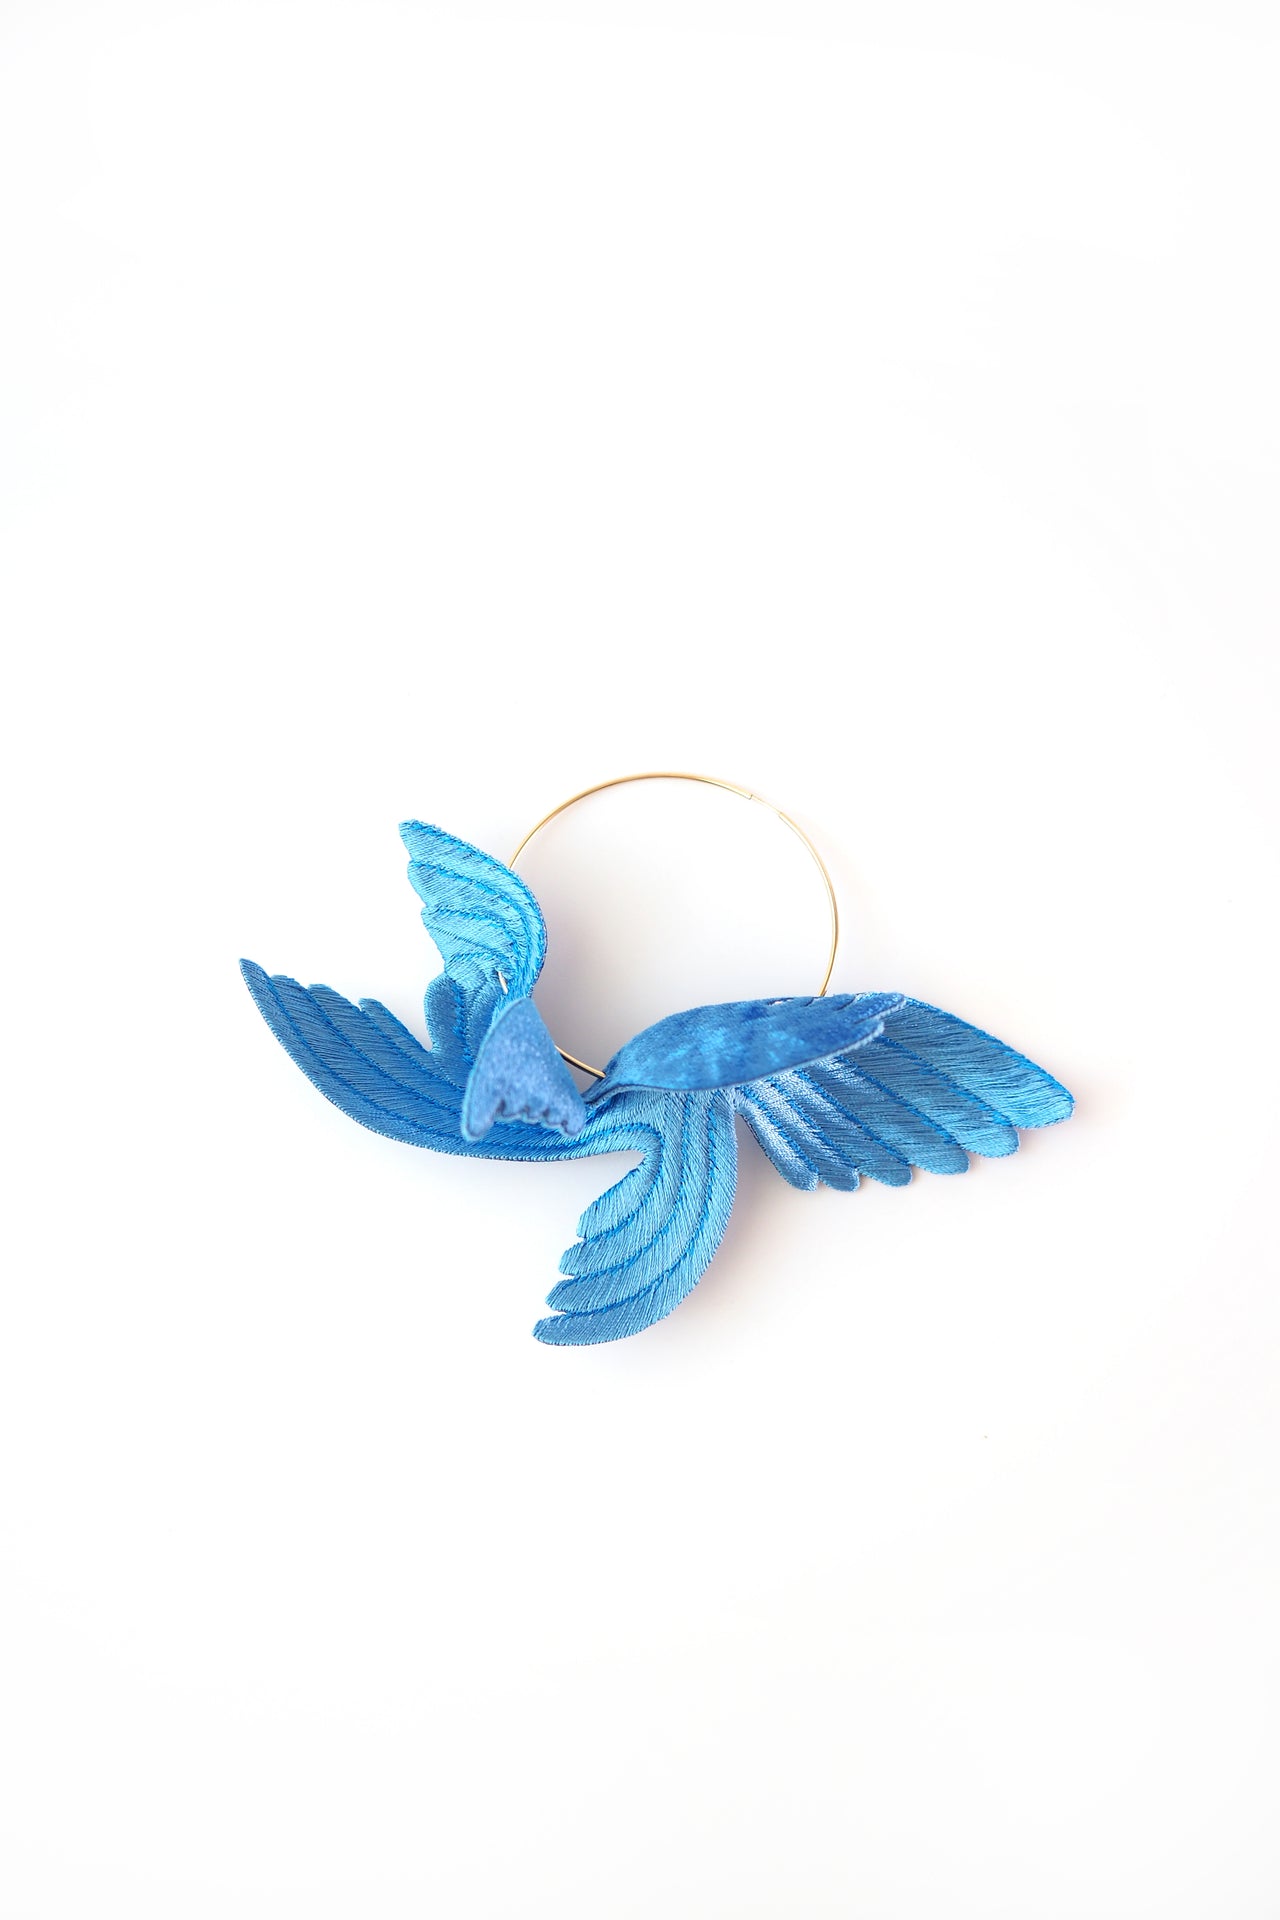 ARRO / JOY"LITTLE BIRD" / 耳環 / 藍色